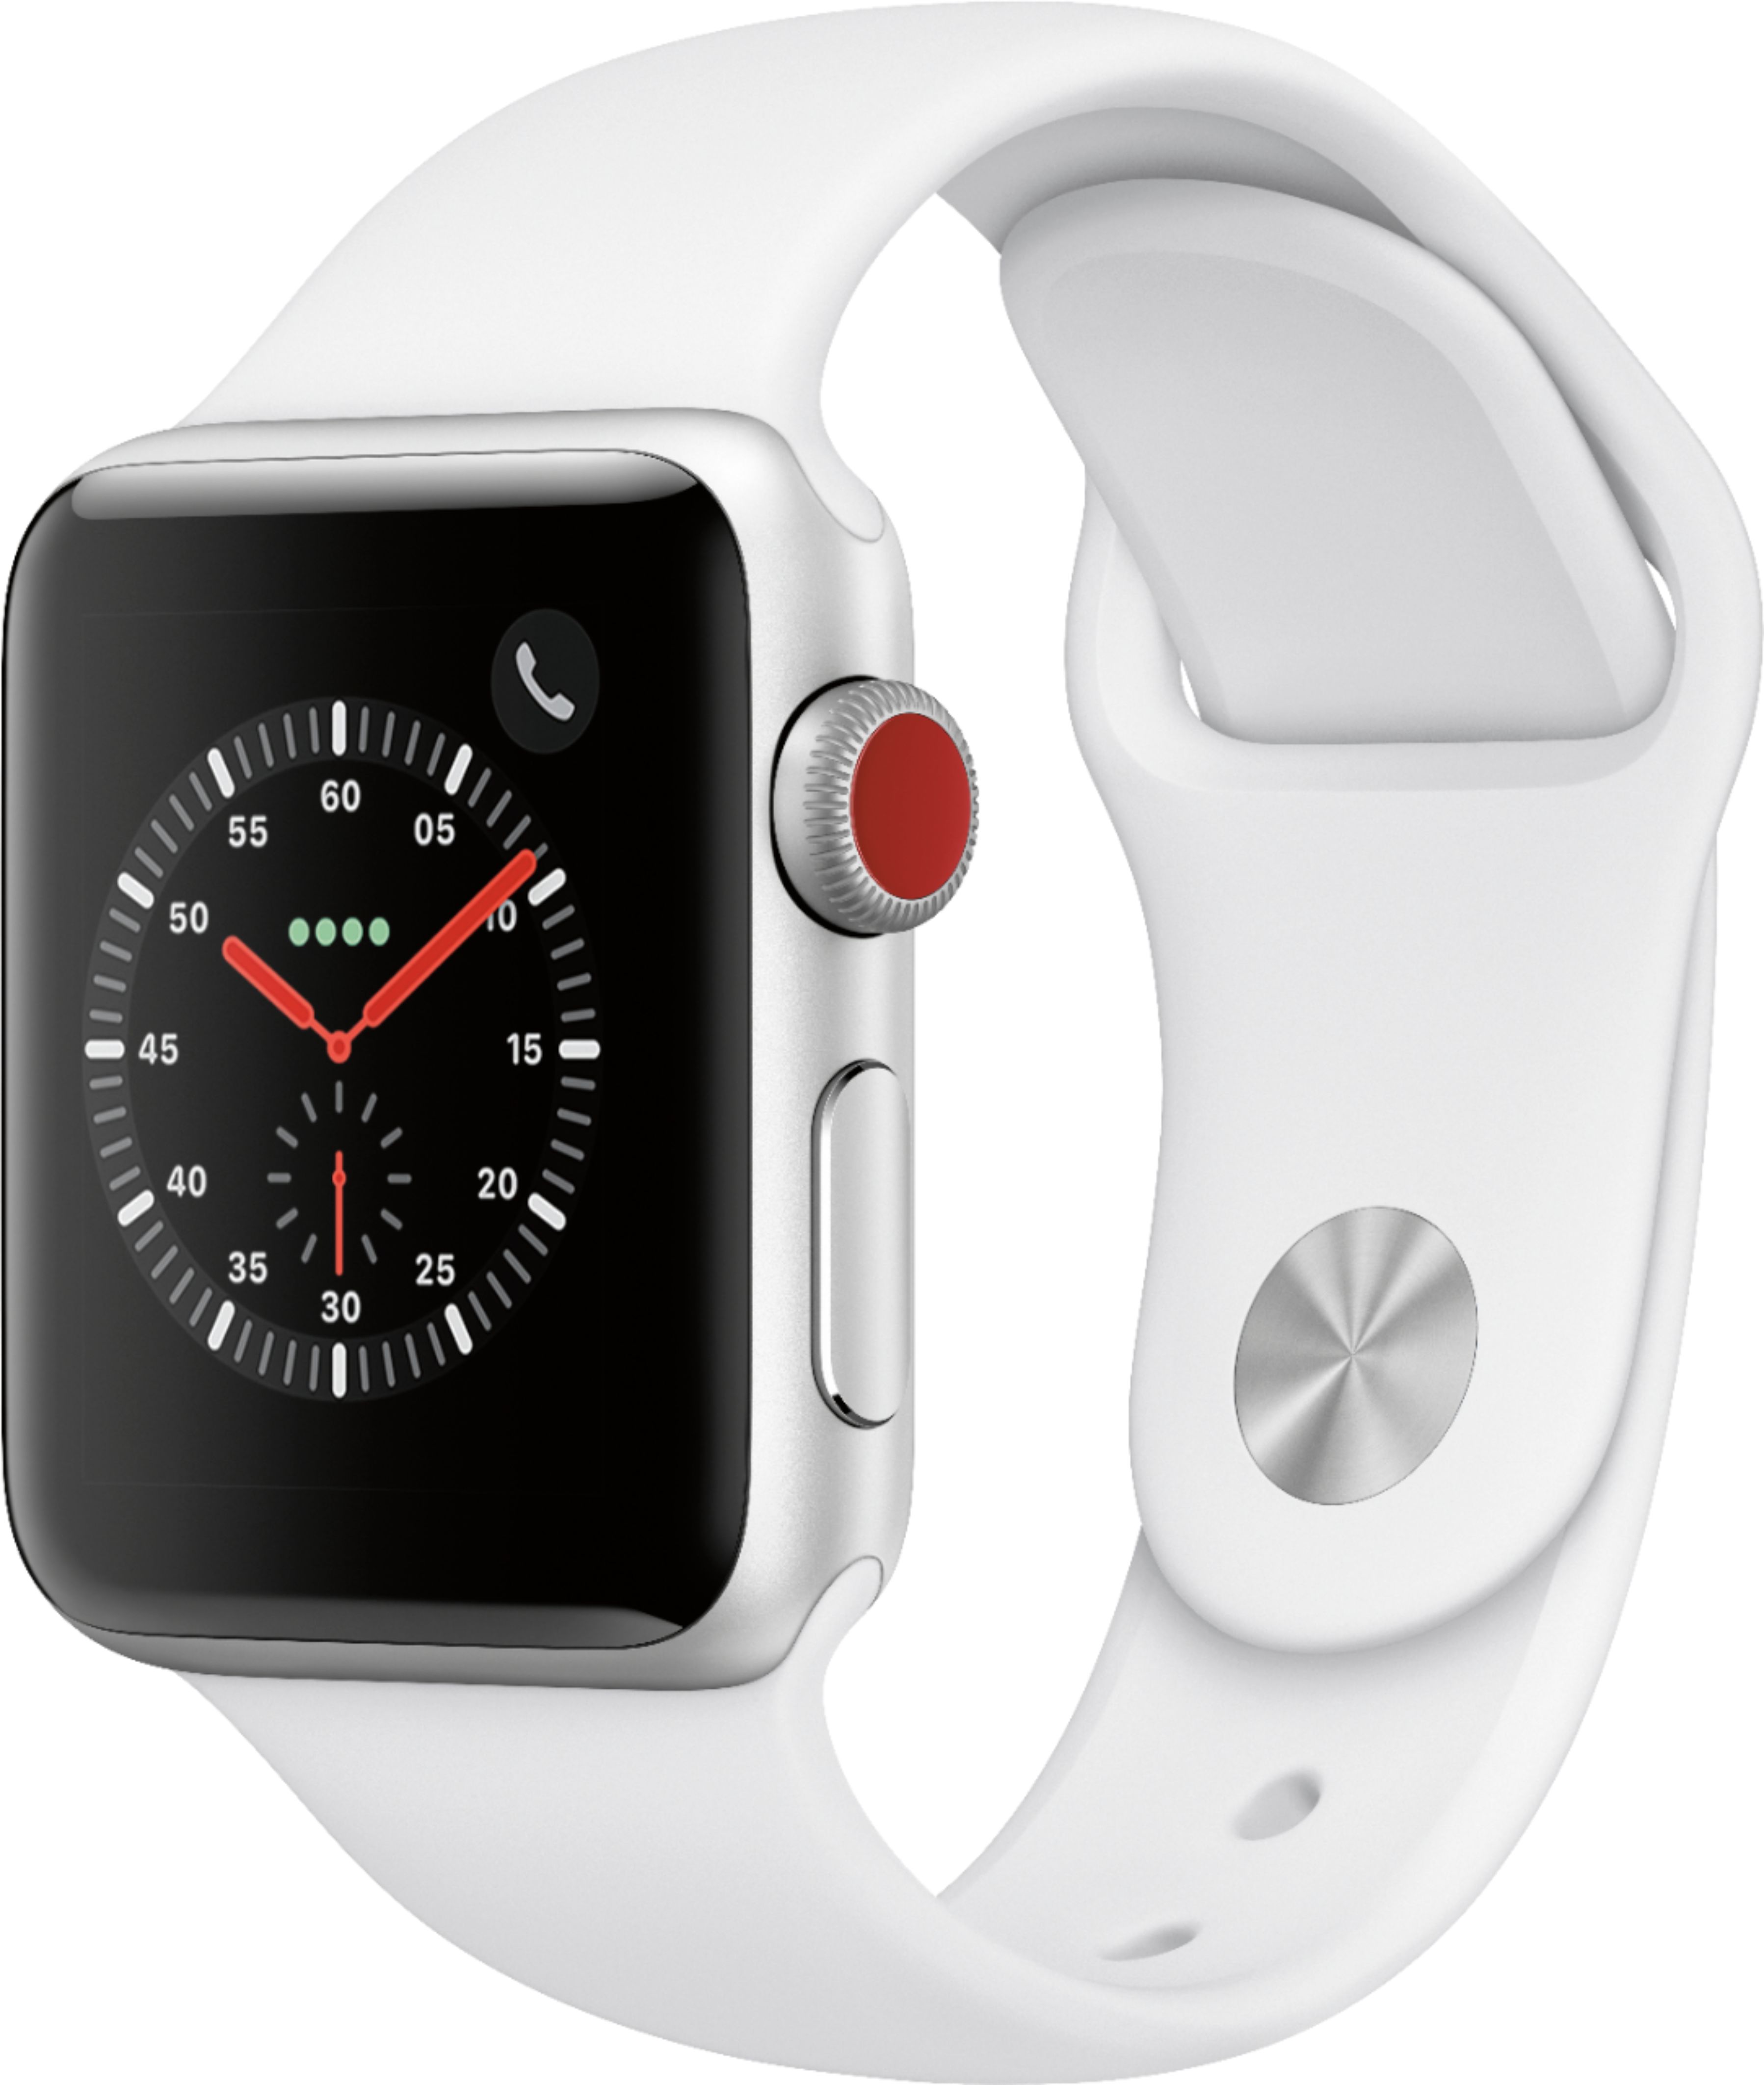 正規品100%新品】Apple Watch - apple watch series3 GPS+cellular ...